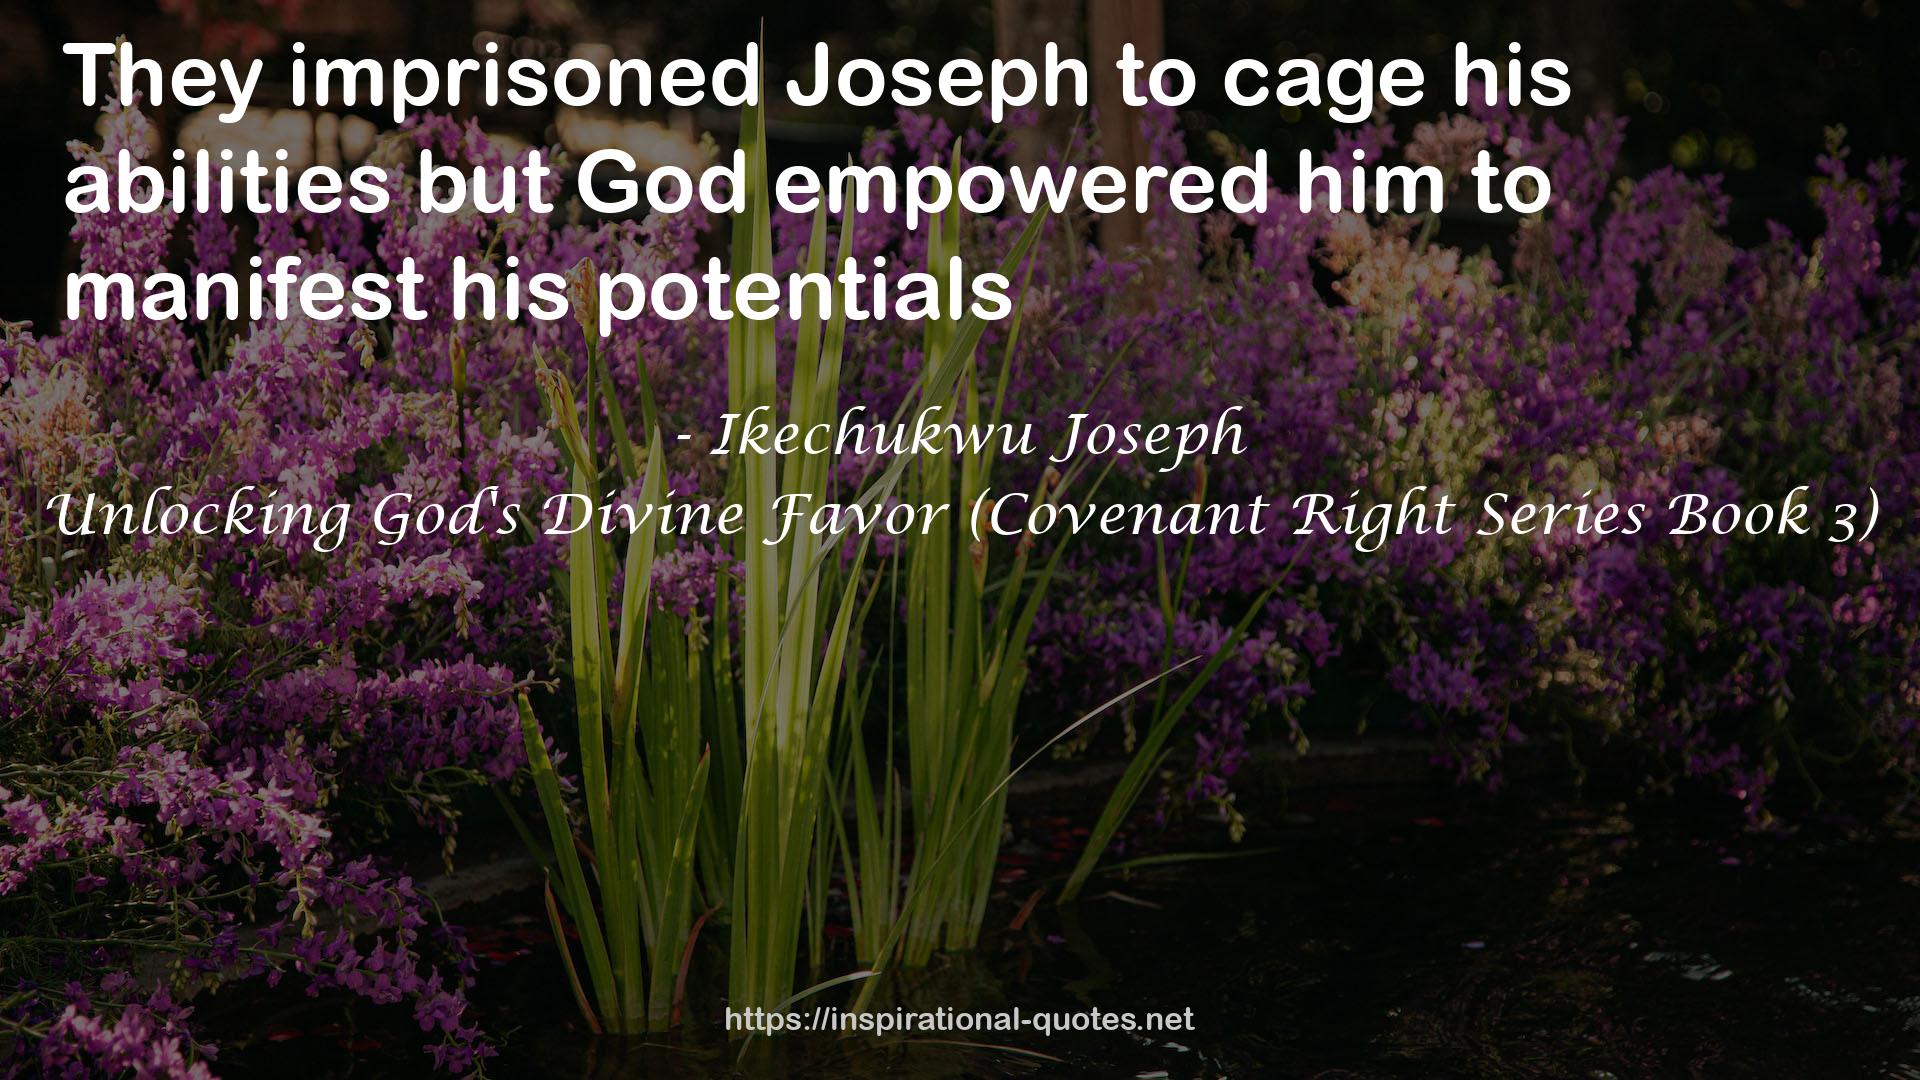 Unlocking God's Divine Favor (Covenant Right Series Book 3) QUOTES